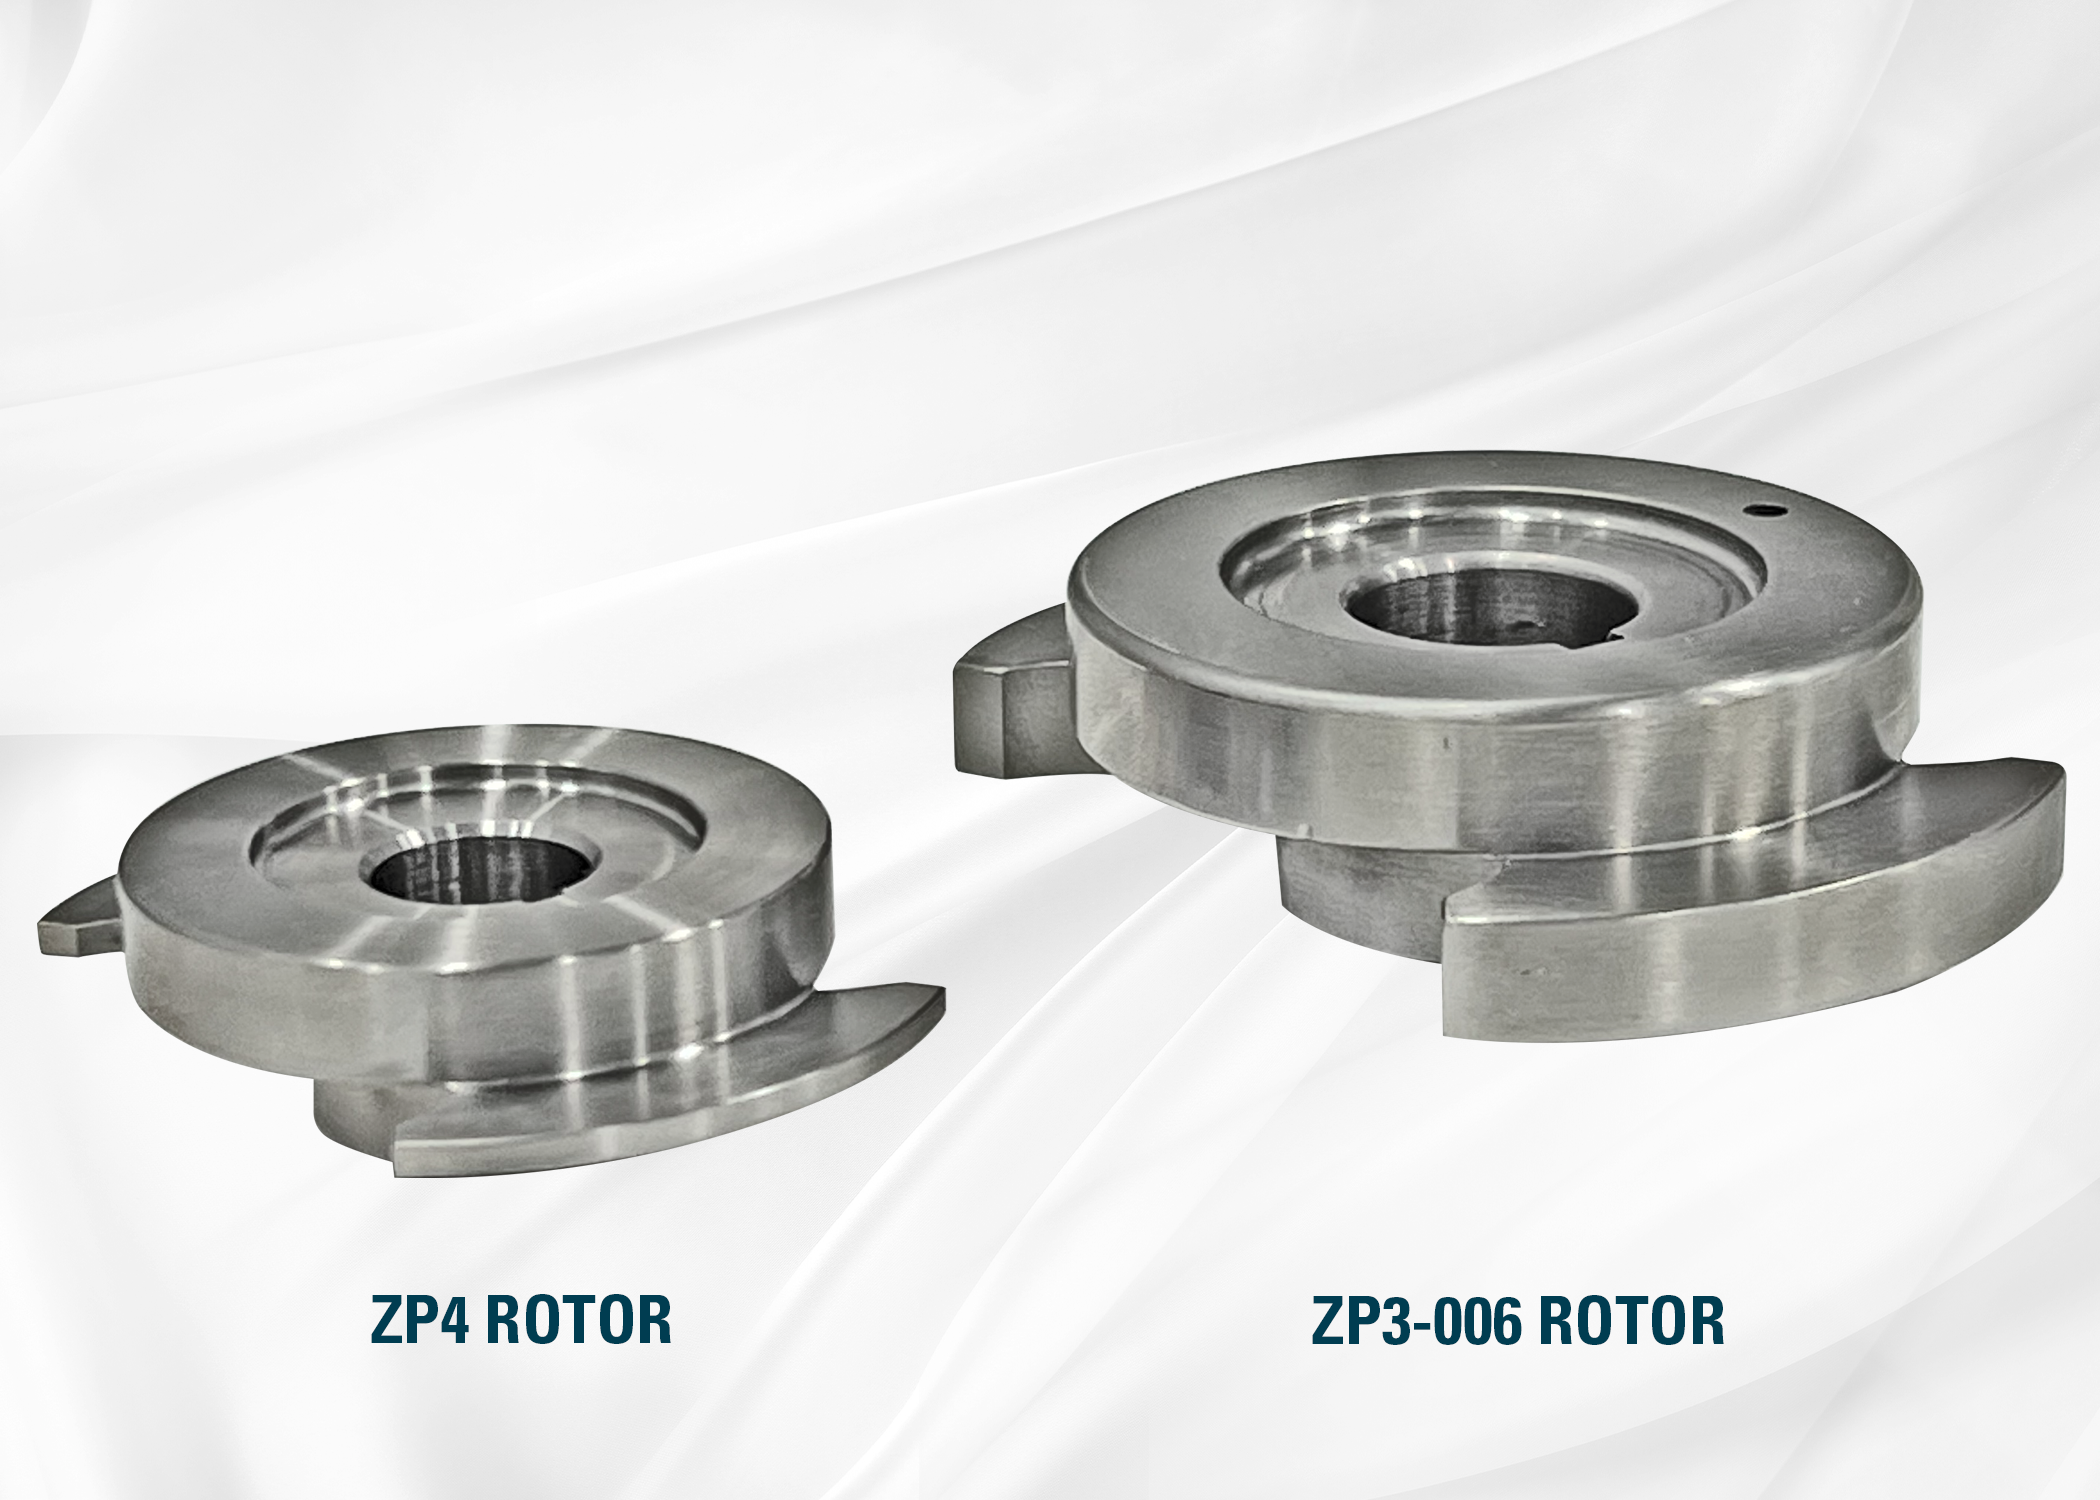 ZP4 and ZP3-006 rotor comparison